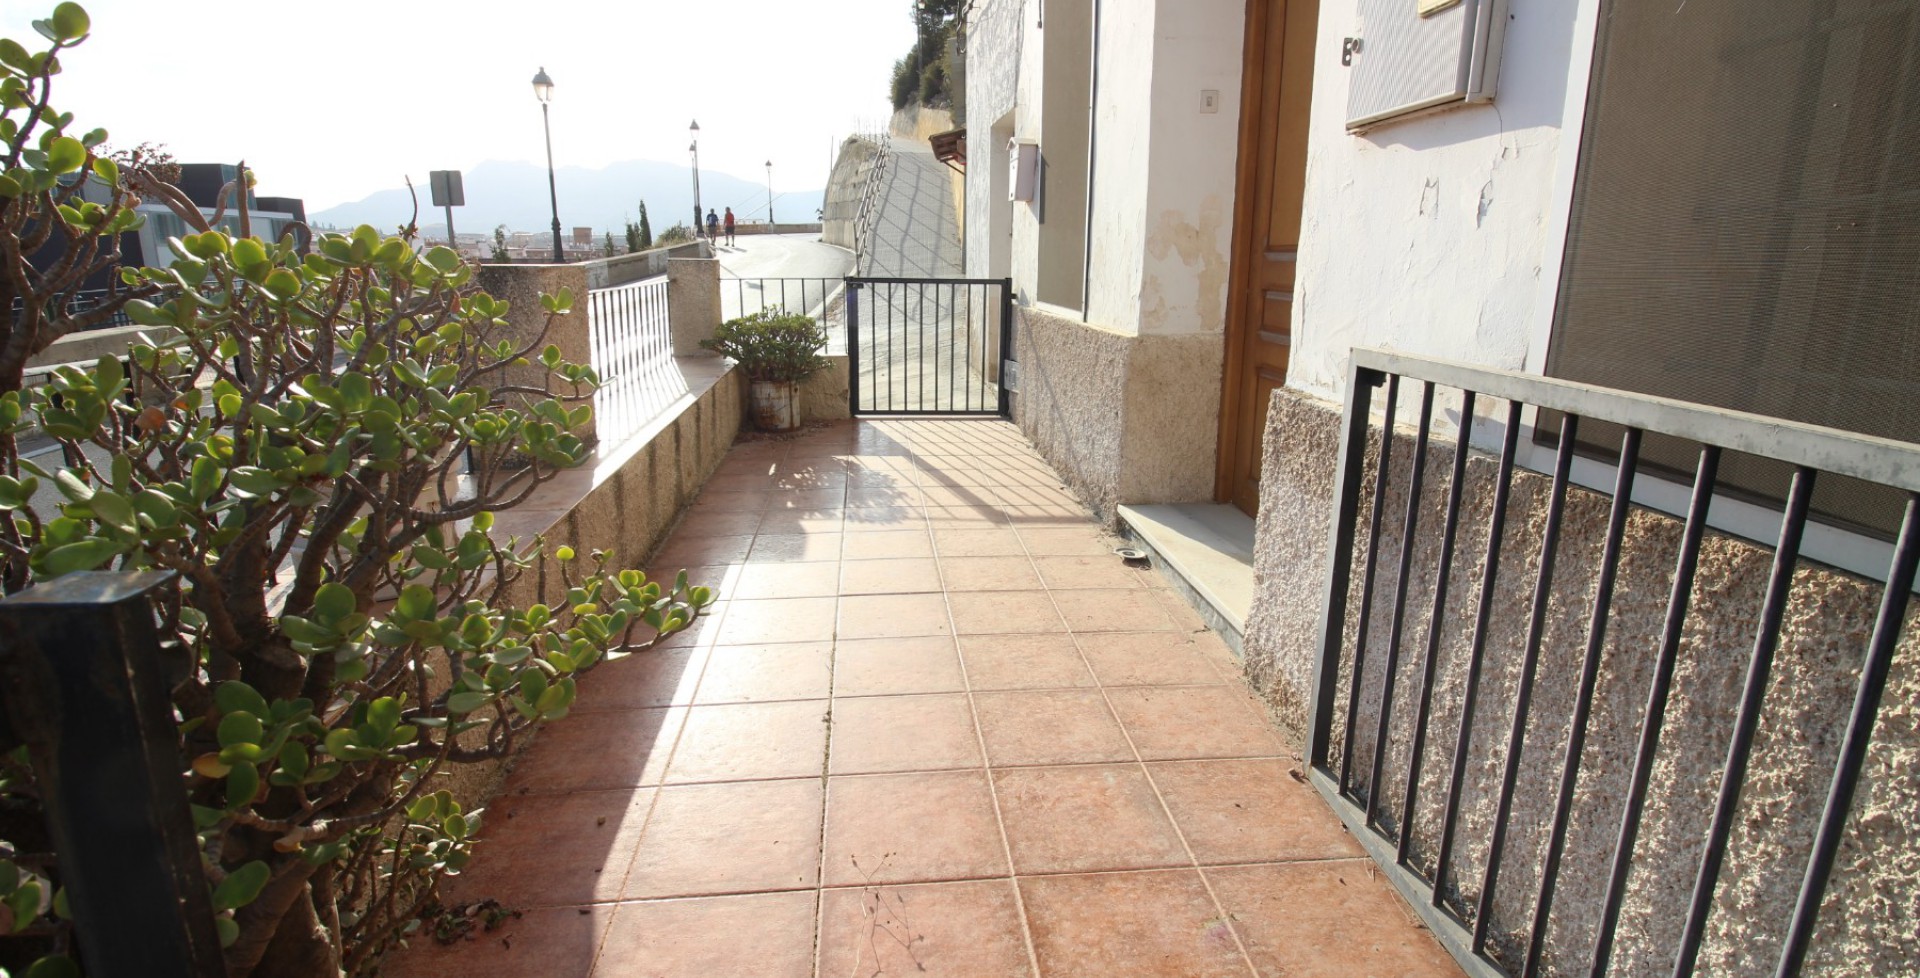 Nice exterior patio at large town house, Blanca, Murcia, Spain